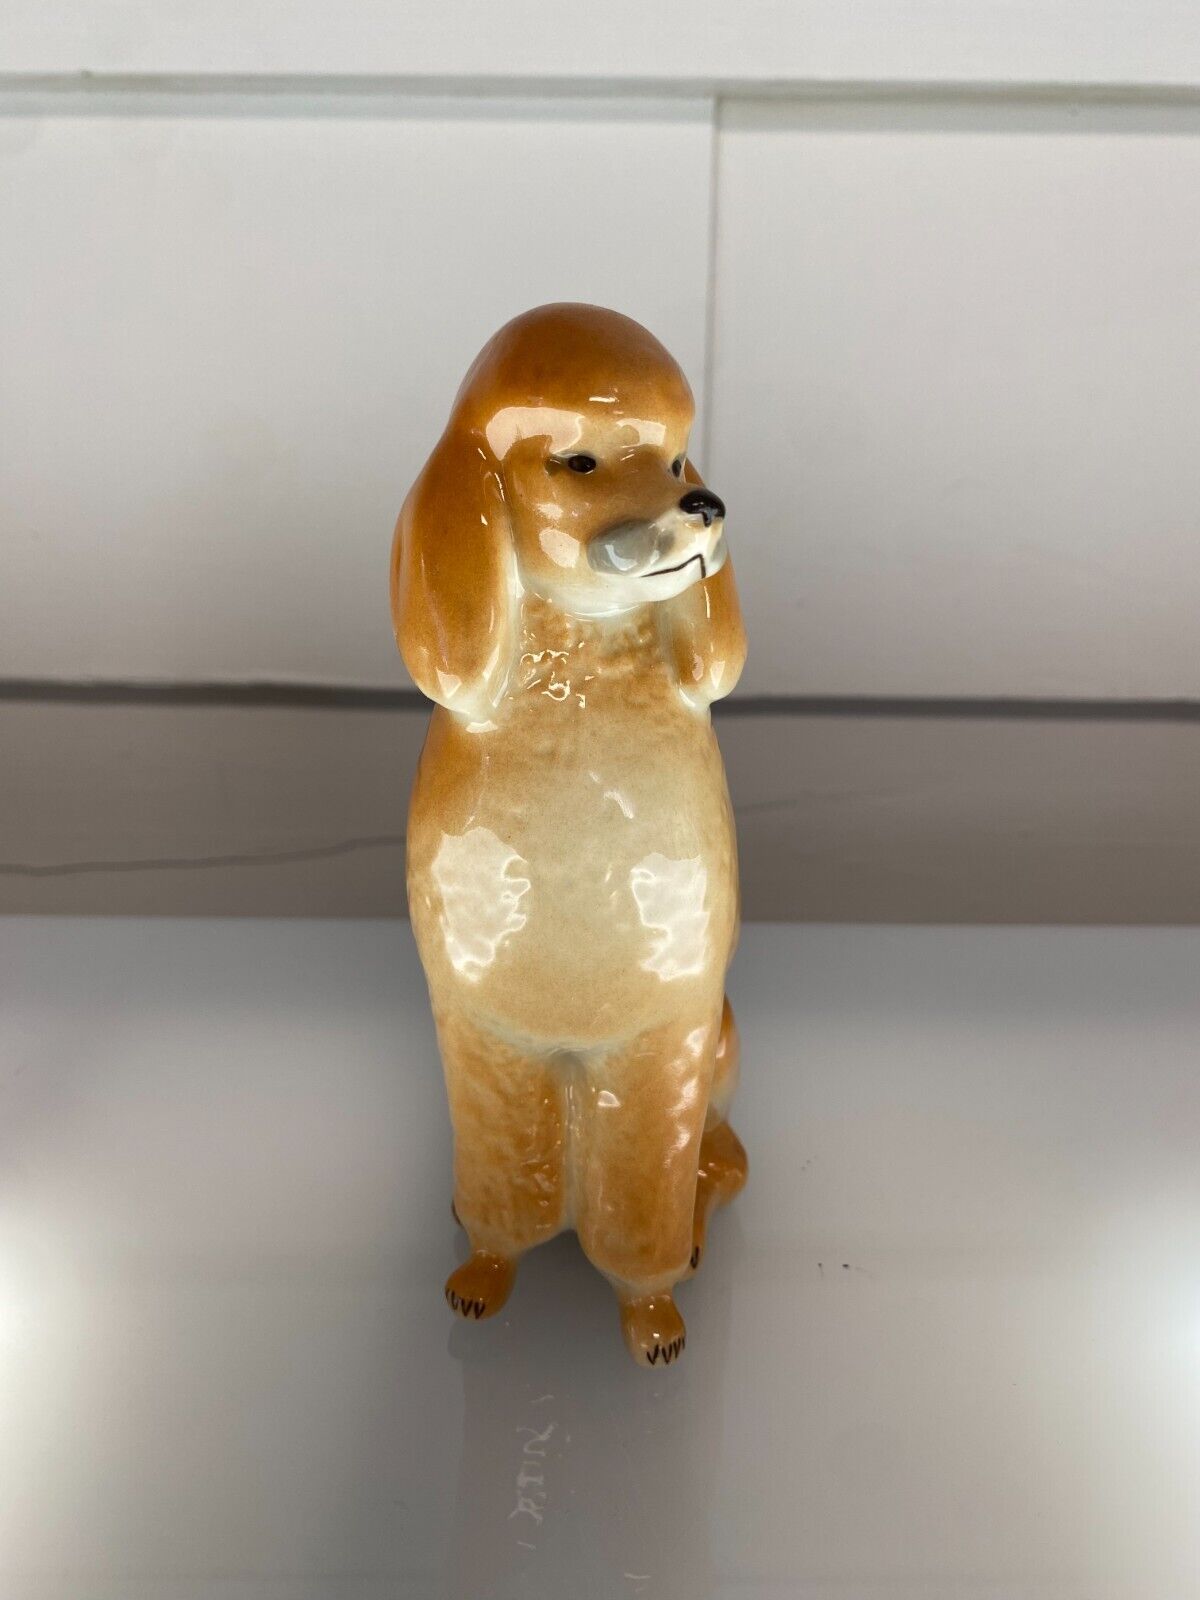 Regal Sitting King Poodle Figurine